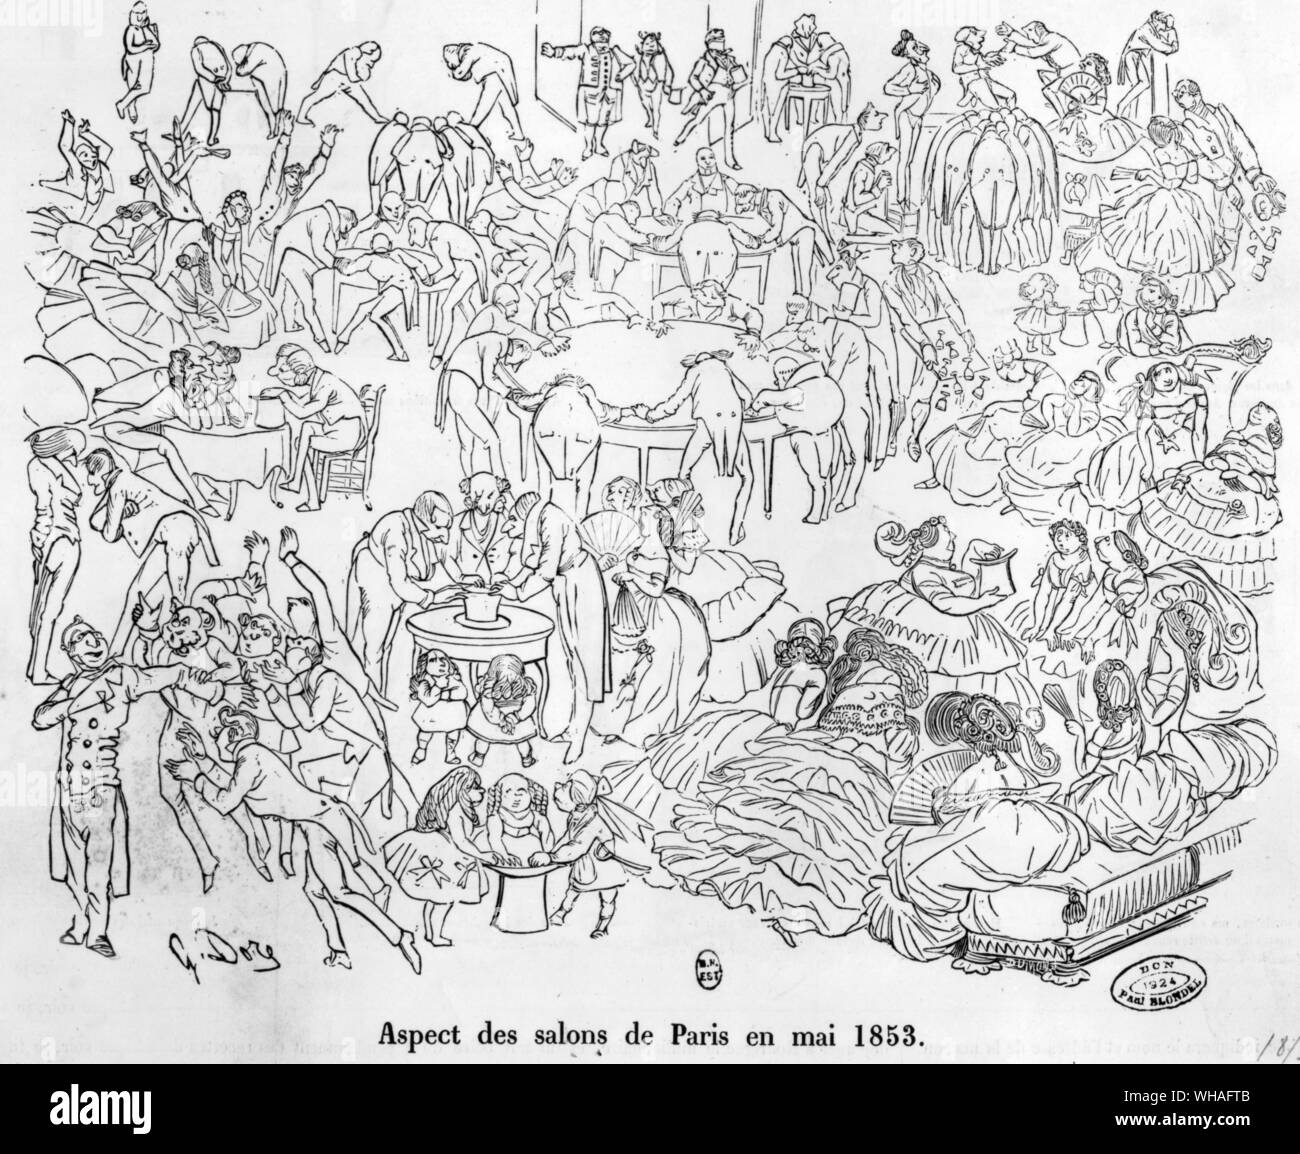 Tabella girando era endemica a Parigi nel 1853 da Gustave Dore. Les tabelle et les tetes tournantes Foto Stock